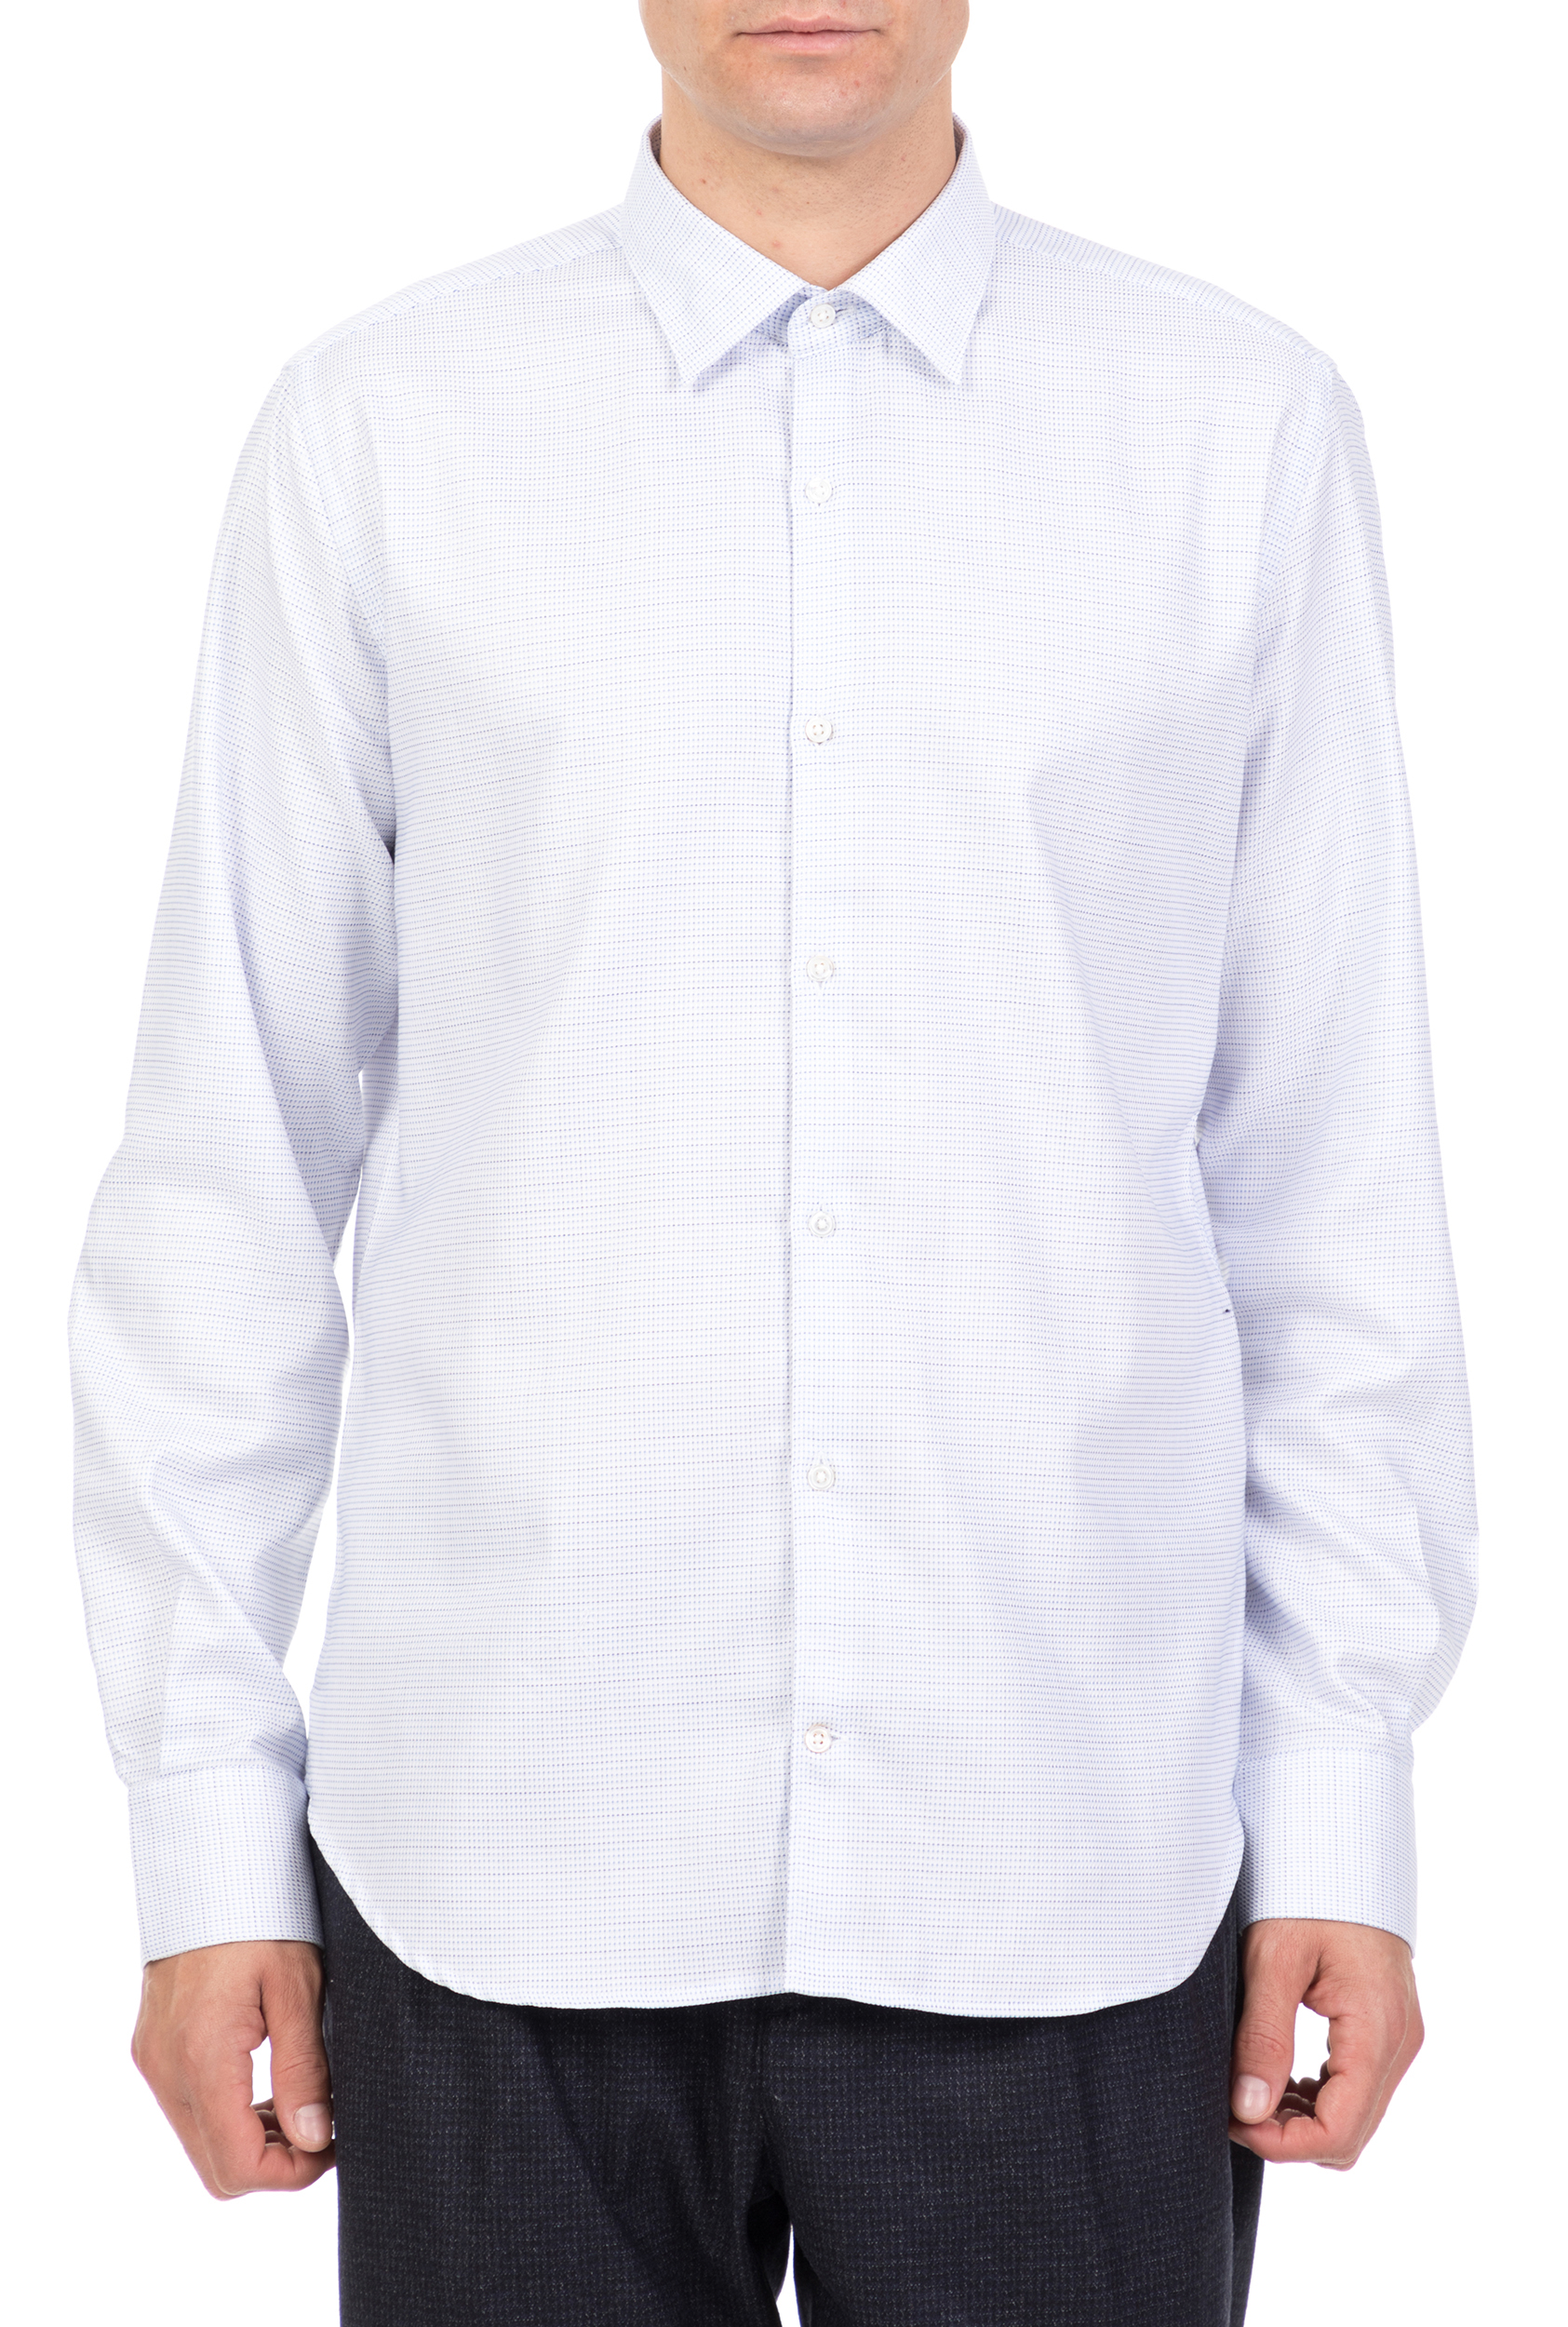 BROOKSFIELD - Ανδρικό μακρυμάνικο πουκάμισο BROOKSFIELD λευκό με print Ανδρικά/Ρούχα/Πουκάμισα/Μακρυμάνικα